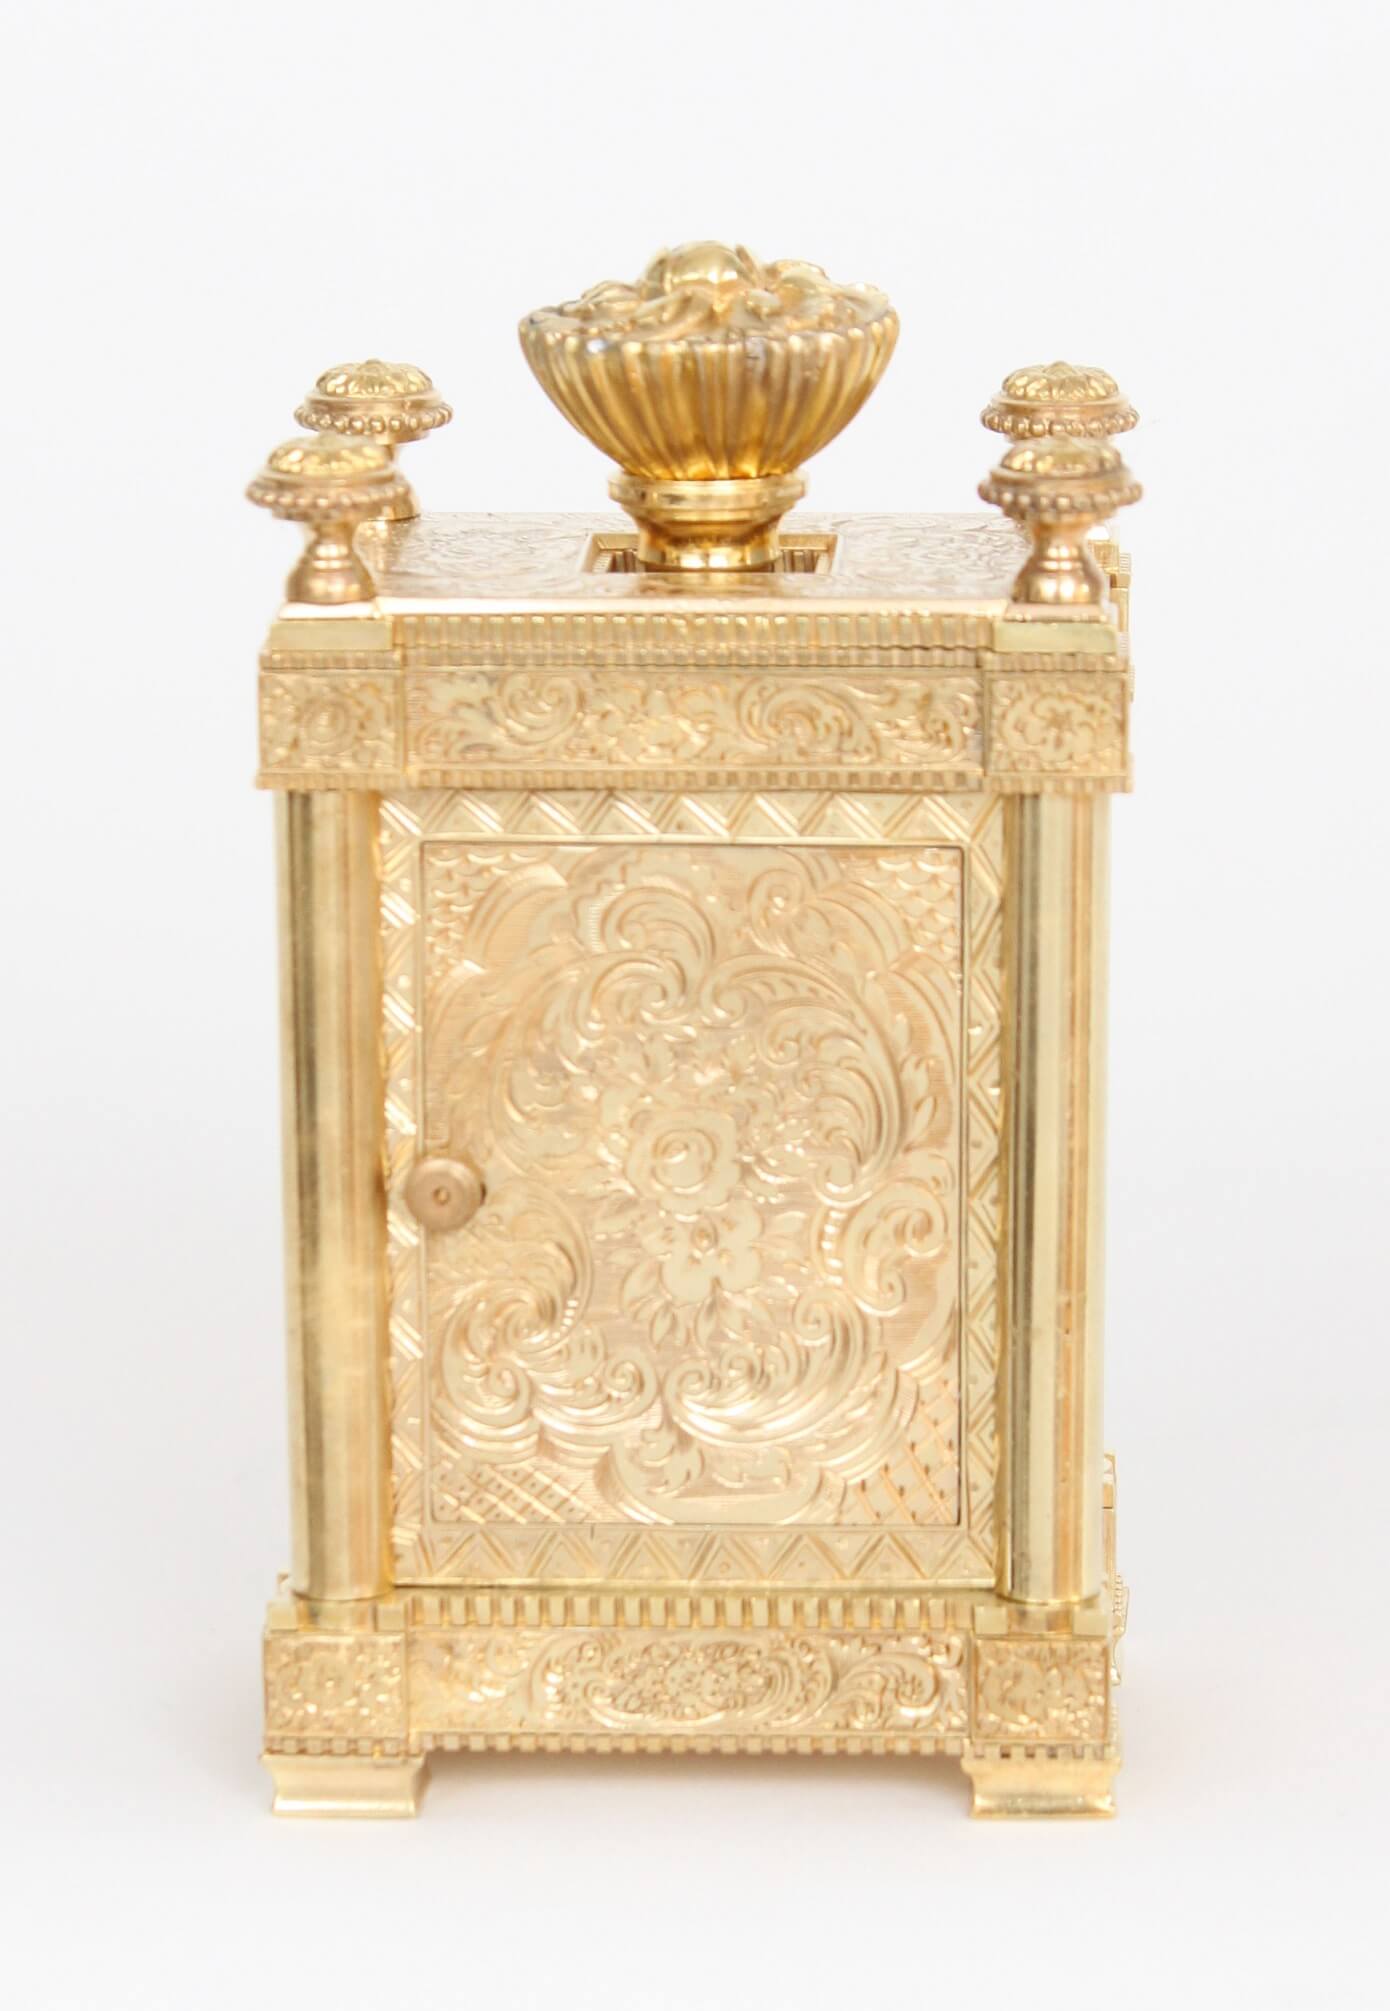 English-Victorian-engraved-gilt-brass-travel-carriage-clock-aubert-klaftenberger-London